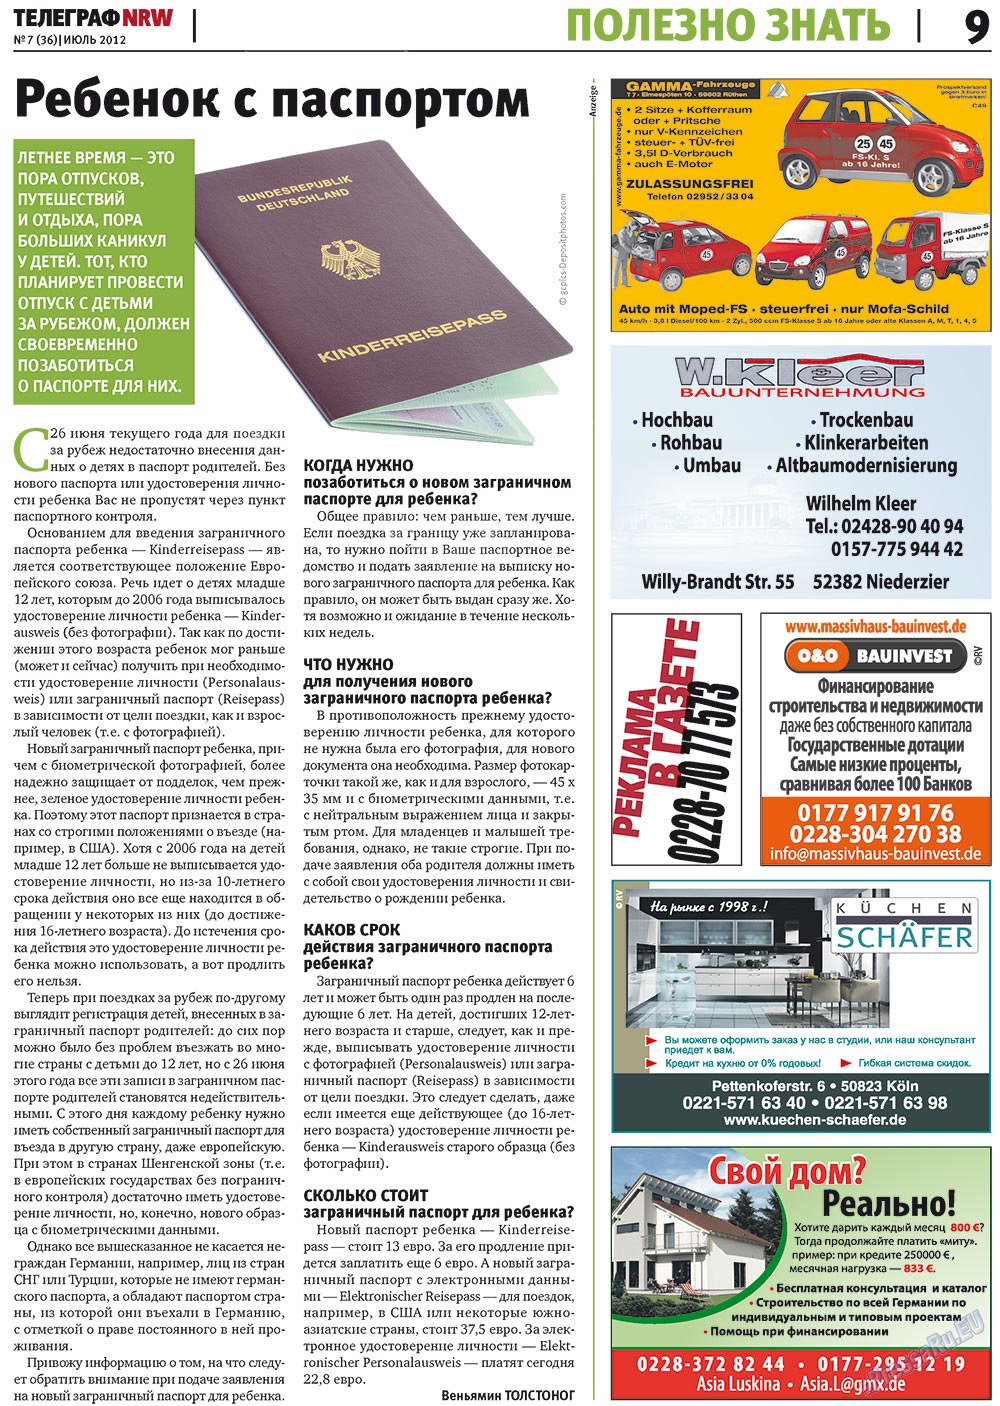 Телеграф NRW, газета. 2012 №7 стр.9